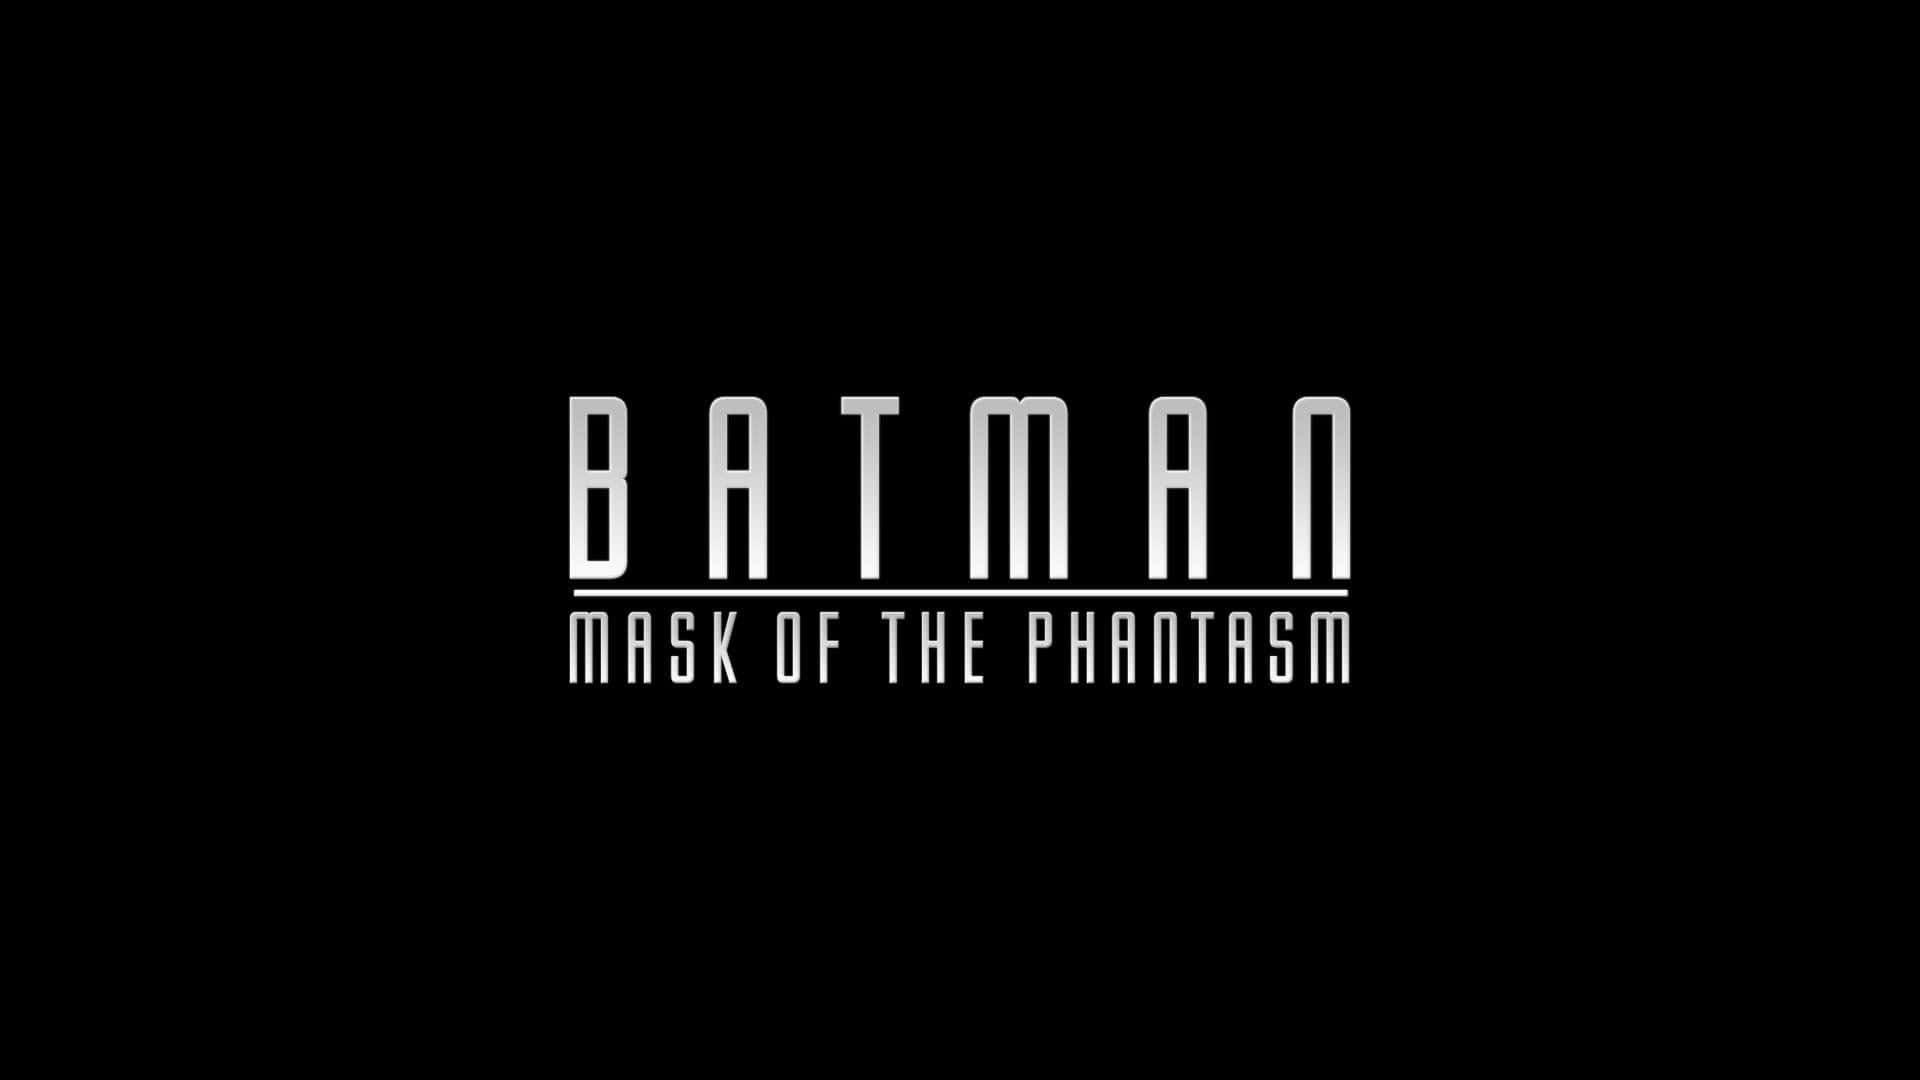 Batman Mask Of The Phantasm Wallpaper